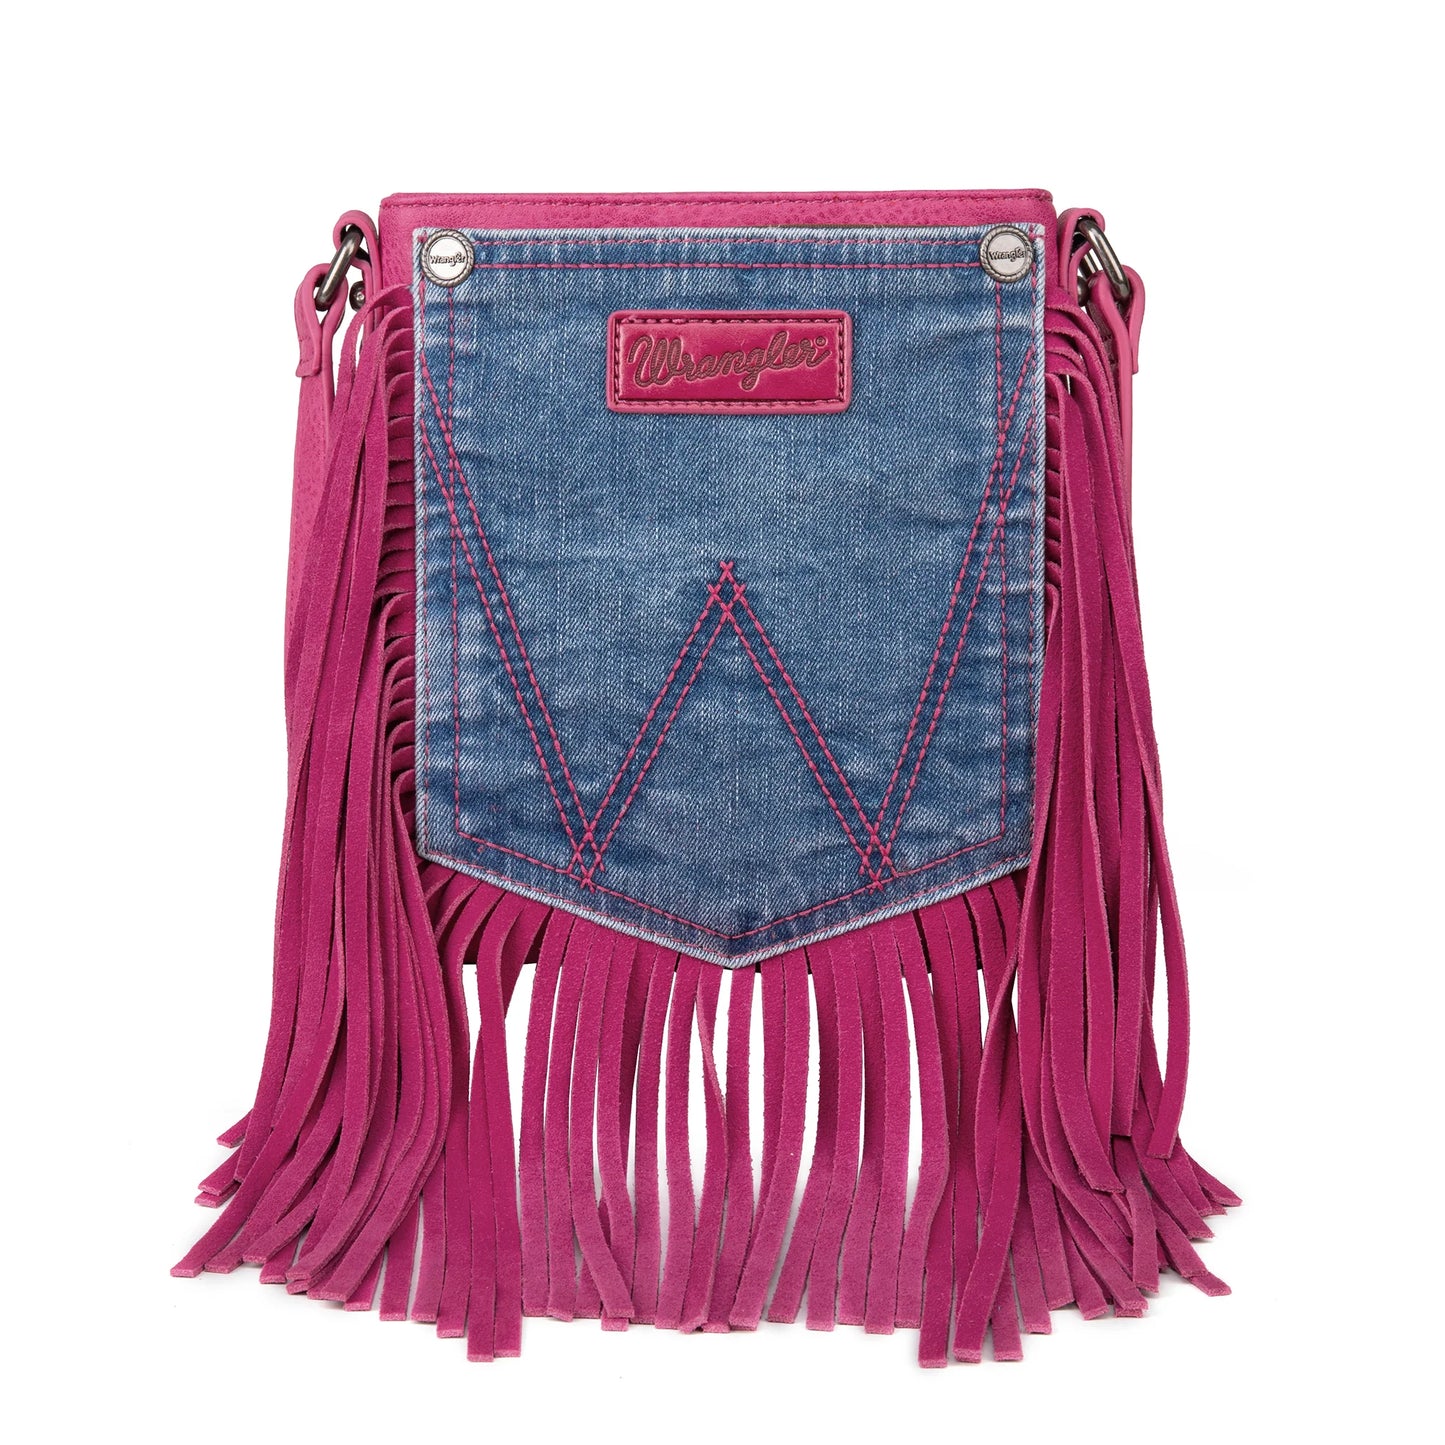 Wrangler Leather Fridge Denim Jean Pocket Crossbody - Pink lol